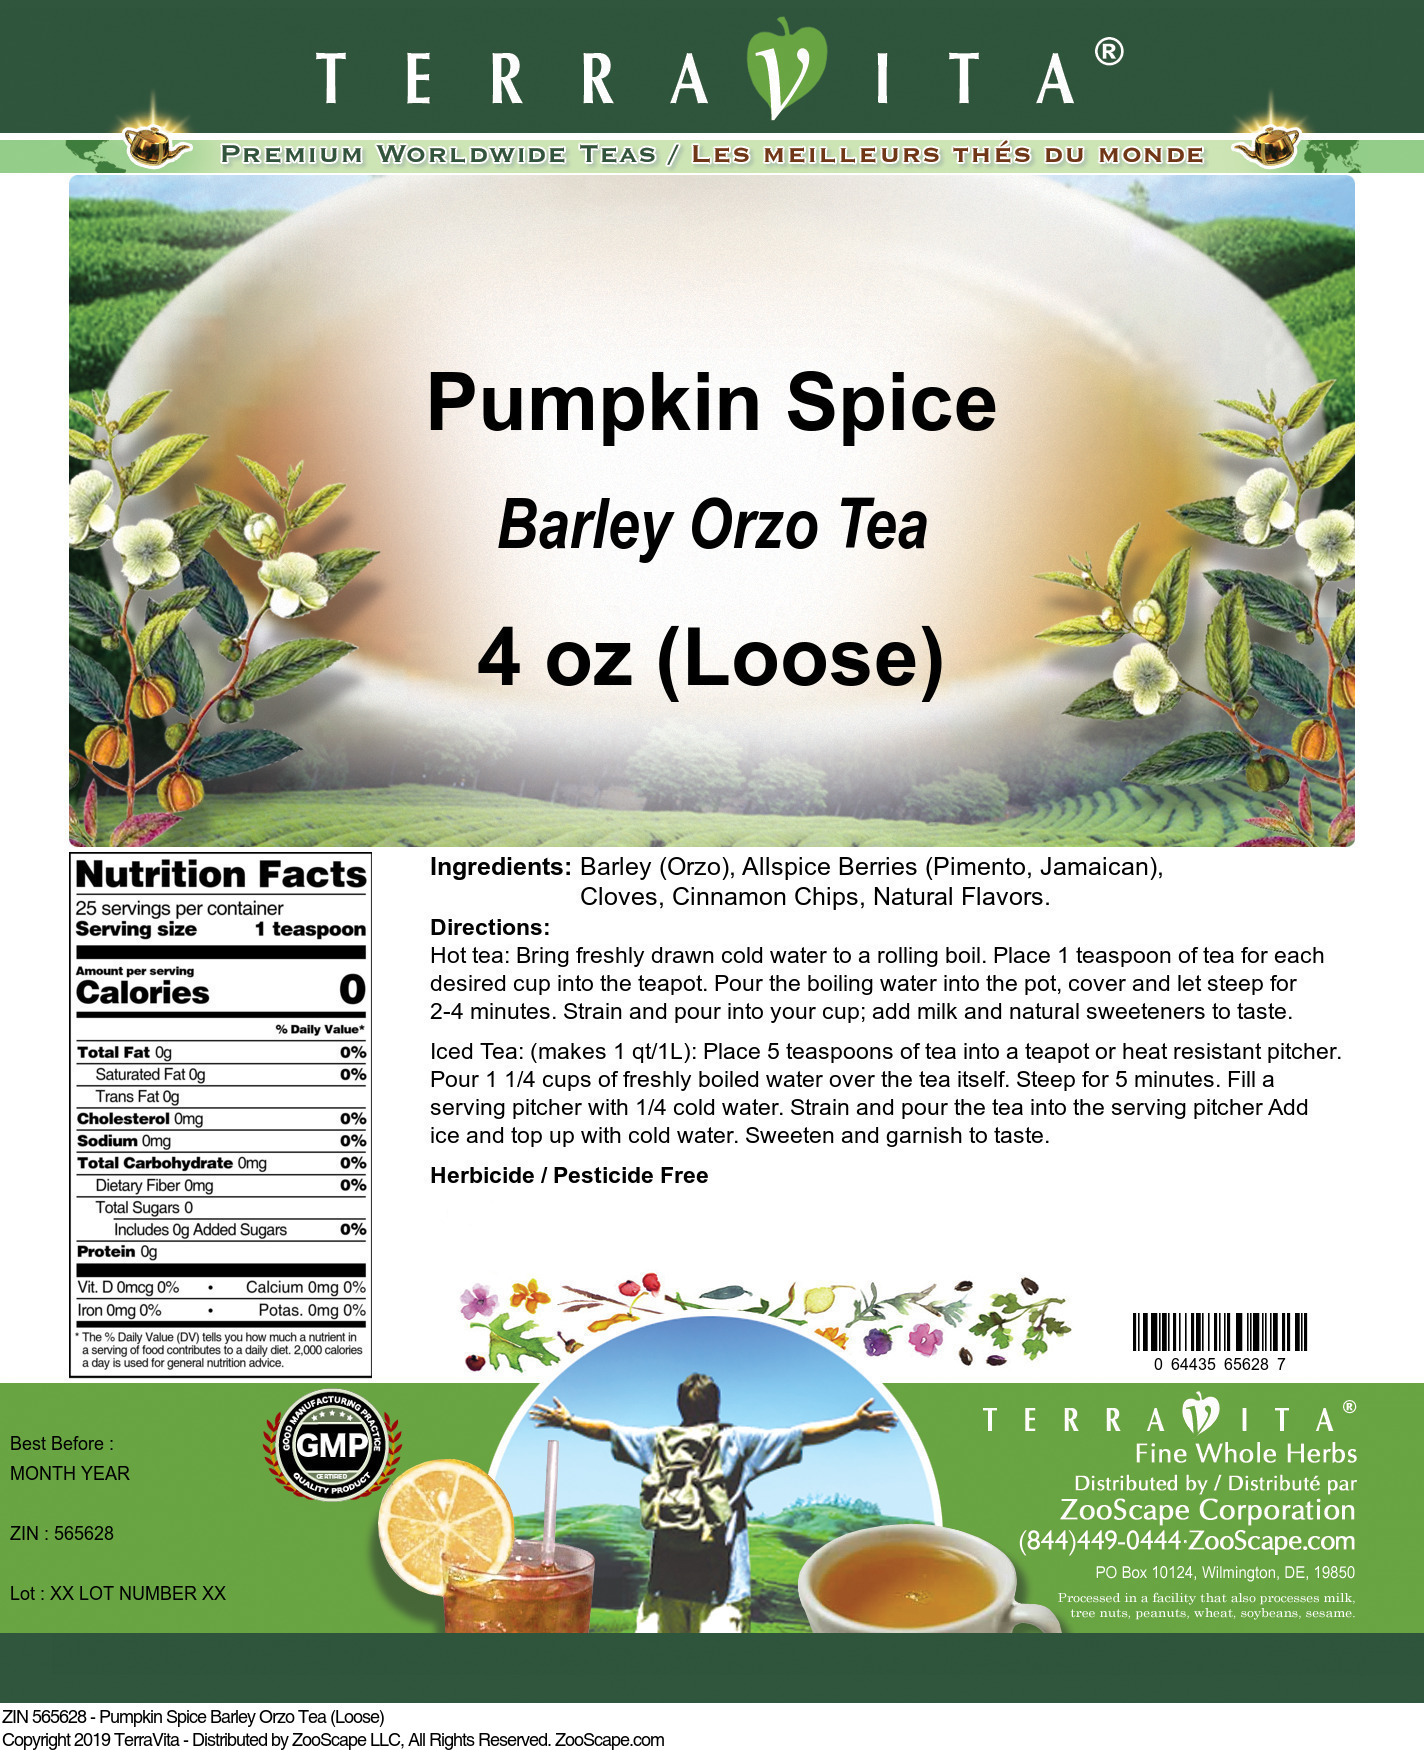 Pumpkin Spice Barley Orzo Tea (Loose) - Label